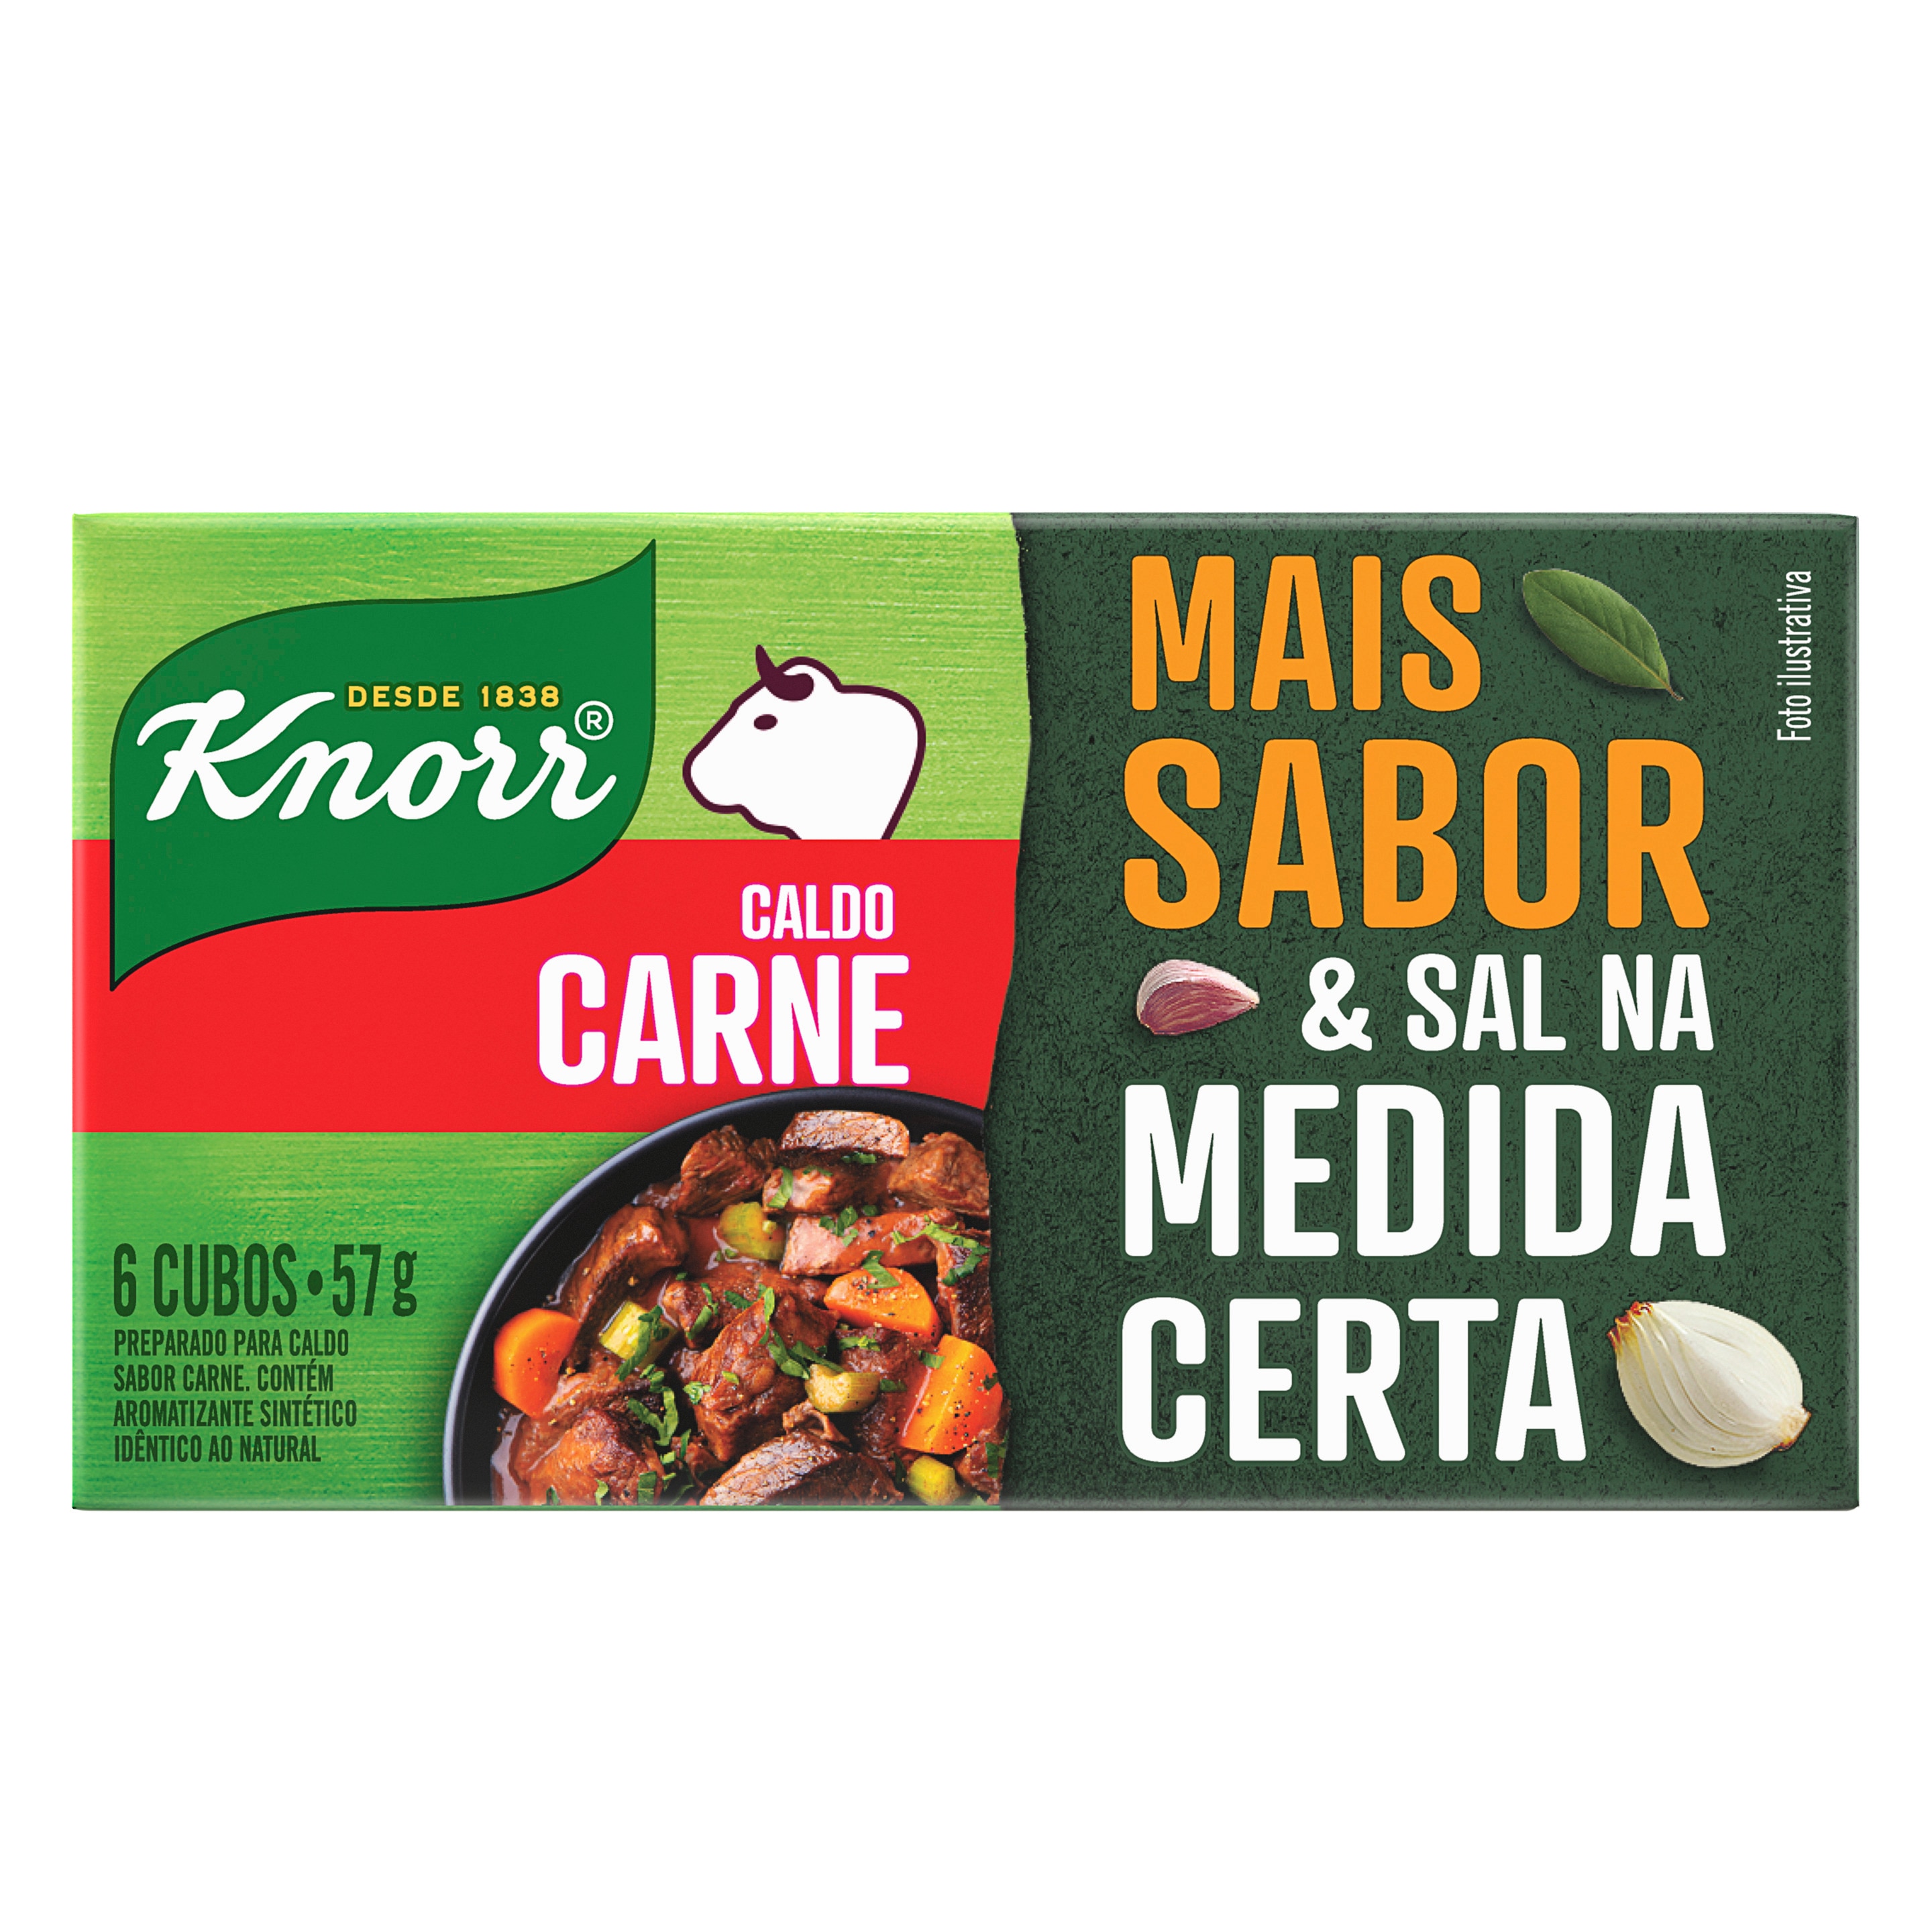 Knorr Galinha